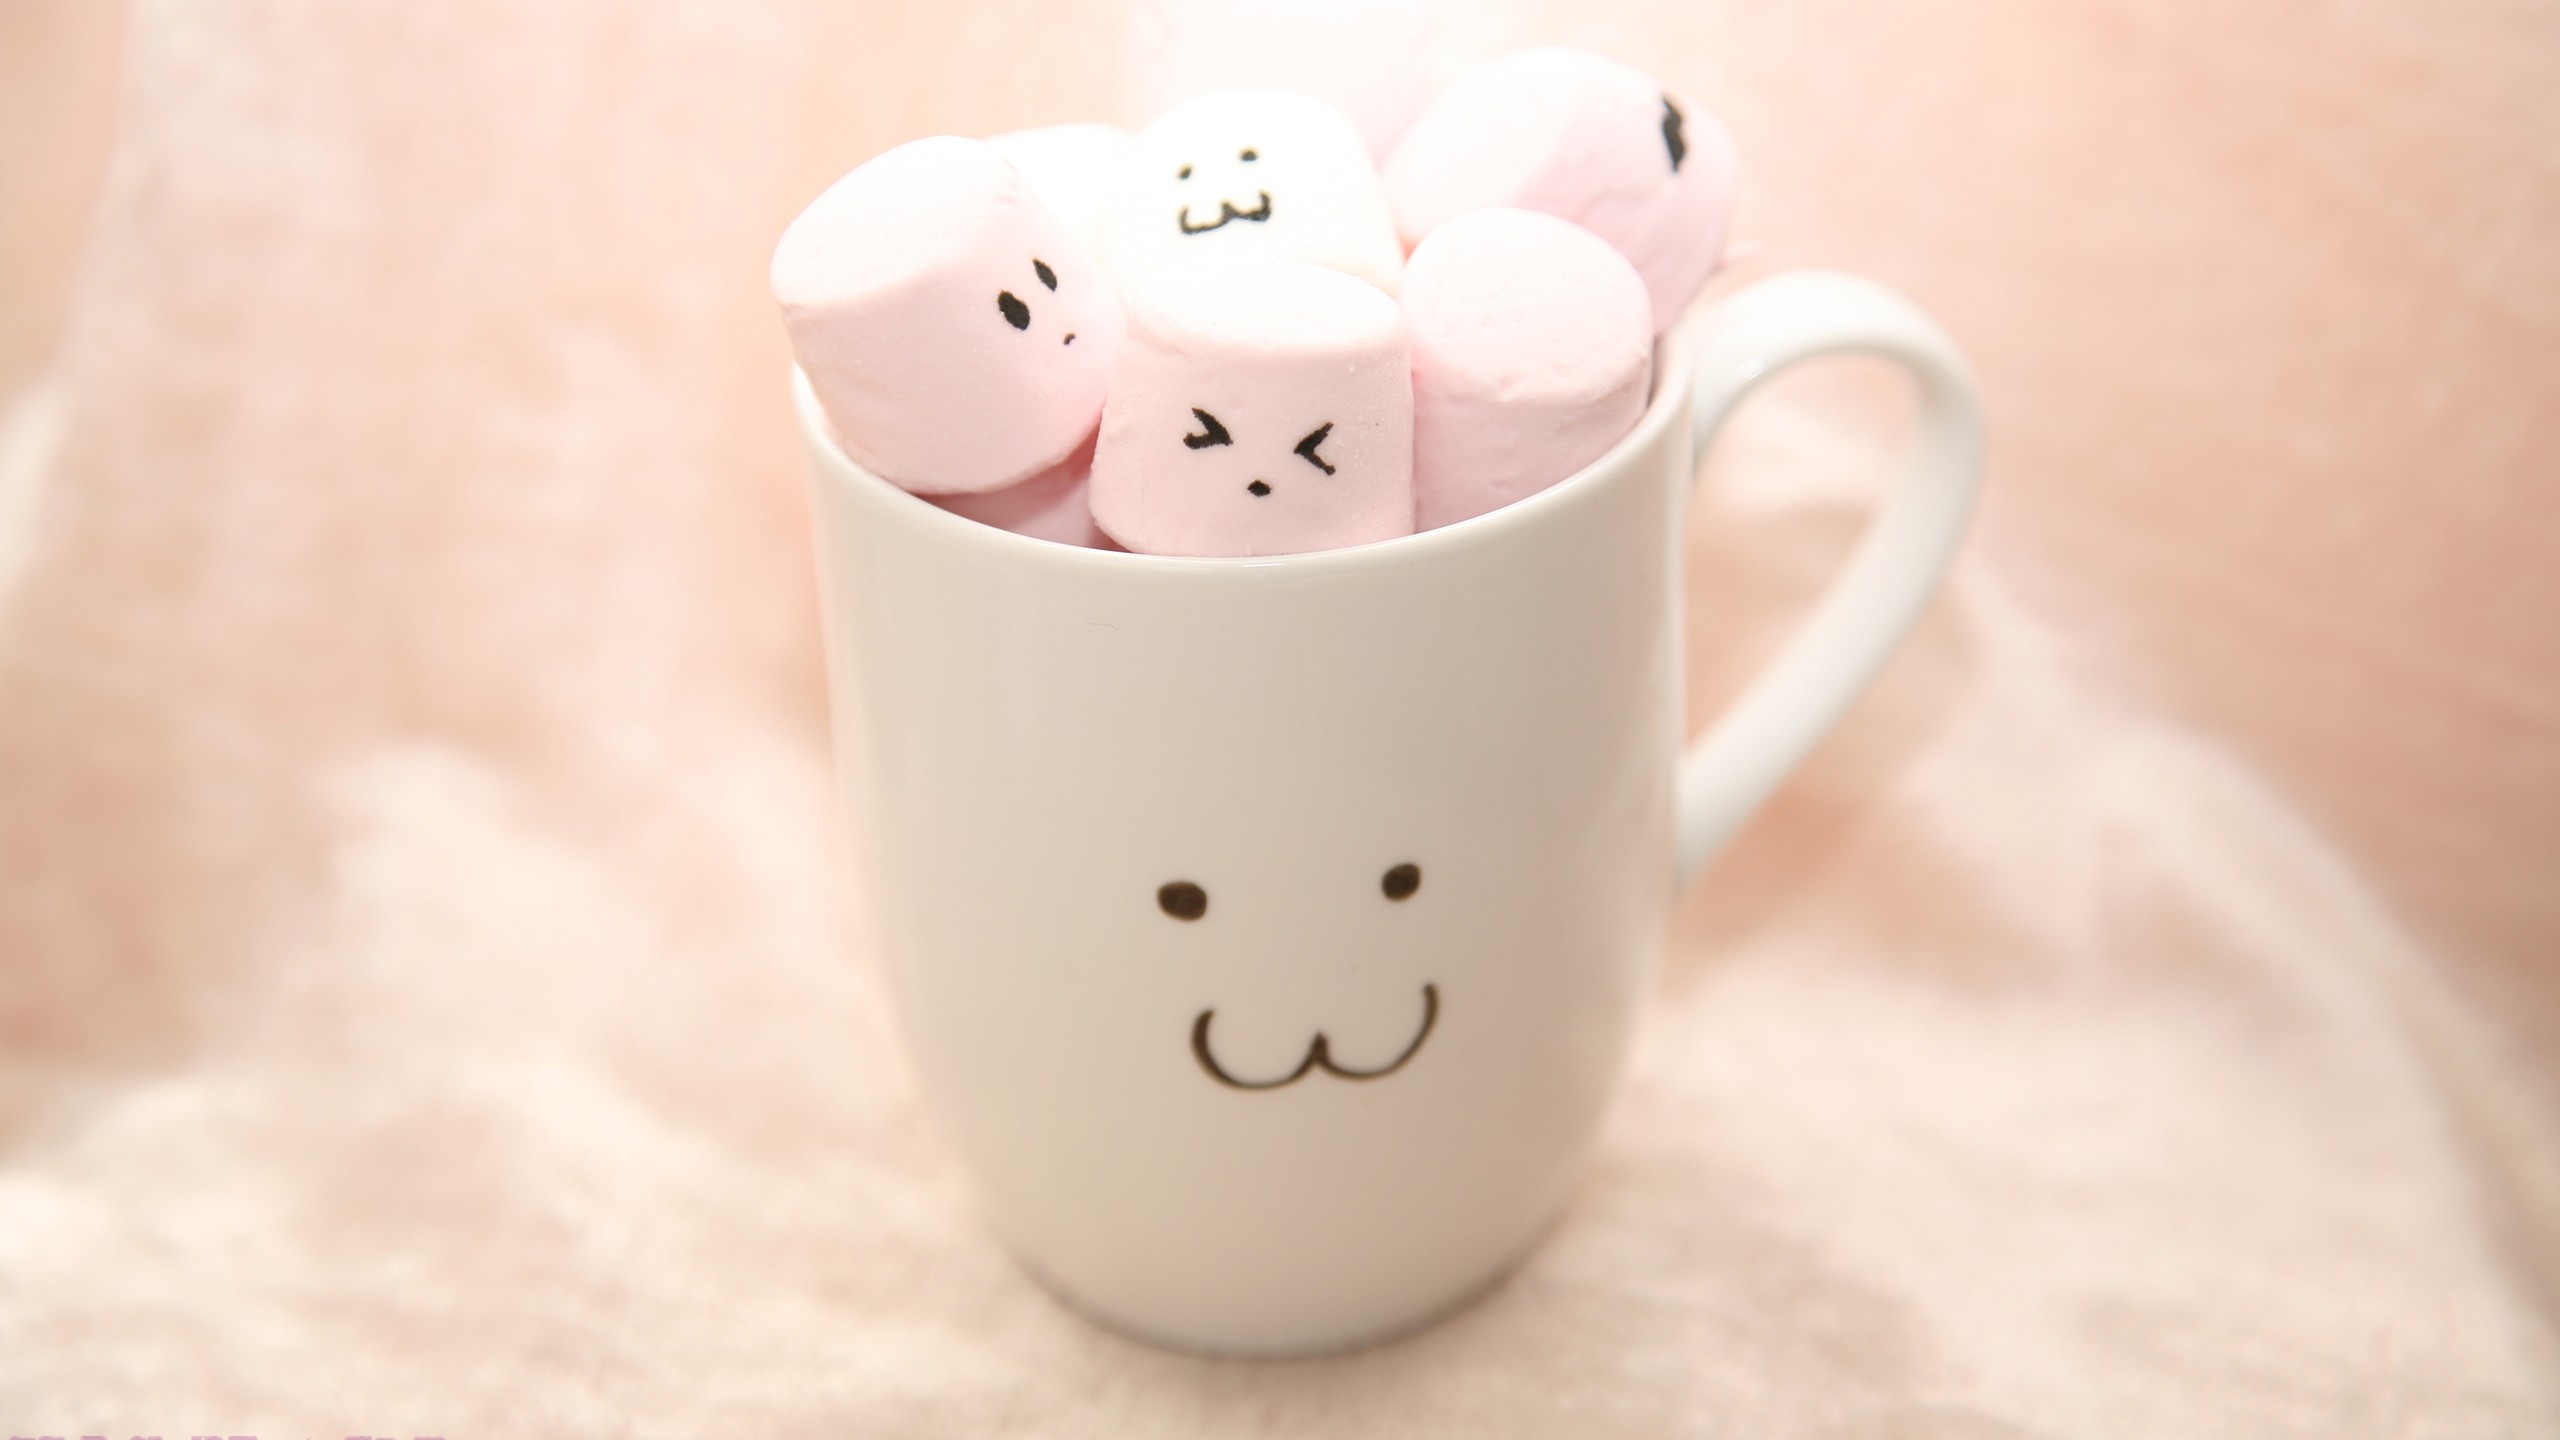 Cute Marshmallow Wallpaper 2560x1440 24266